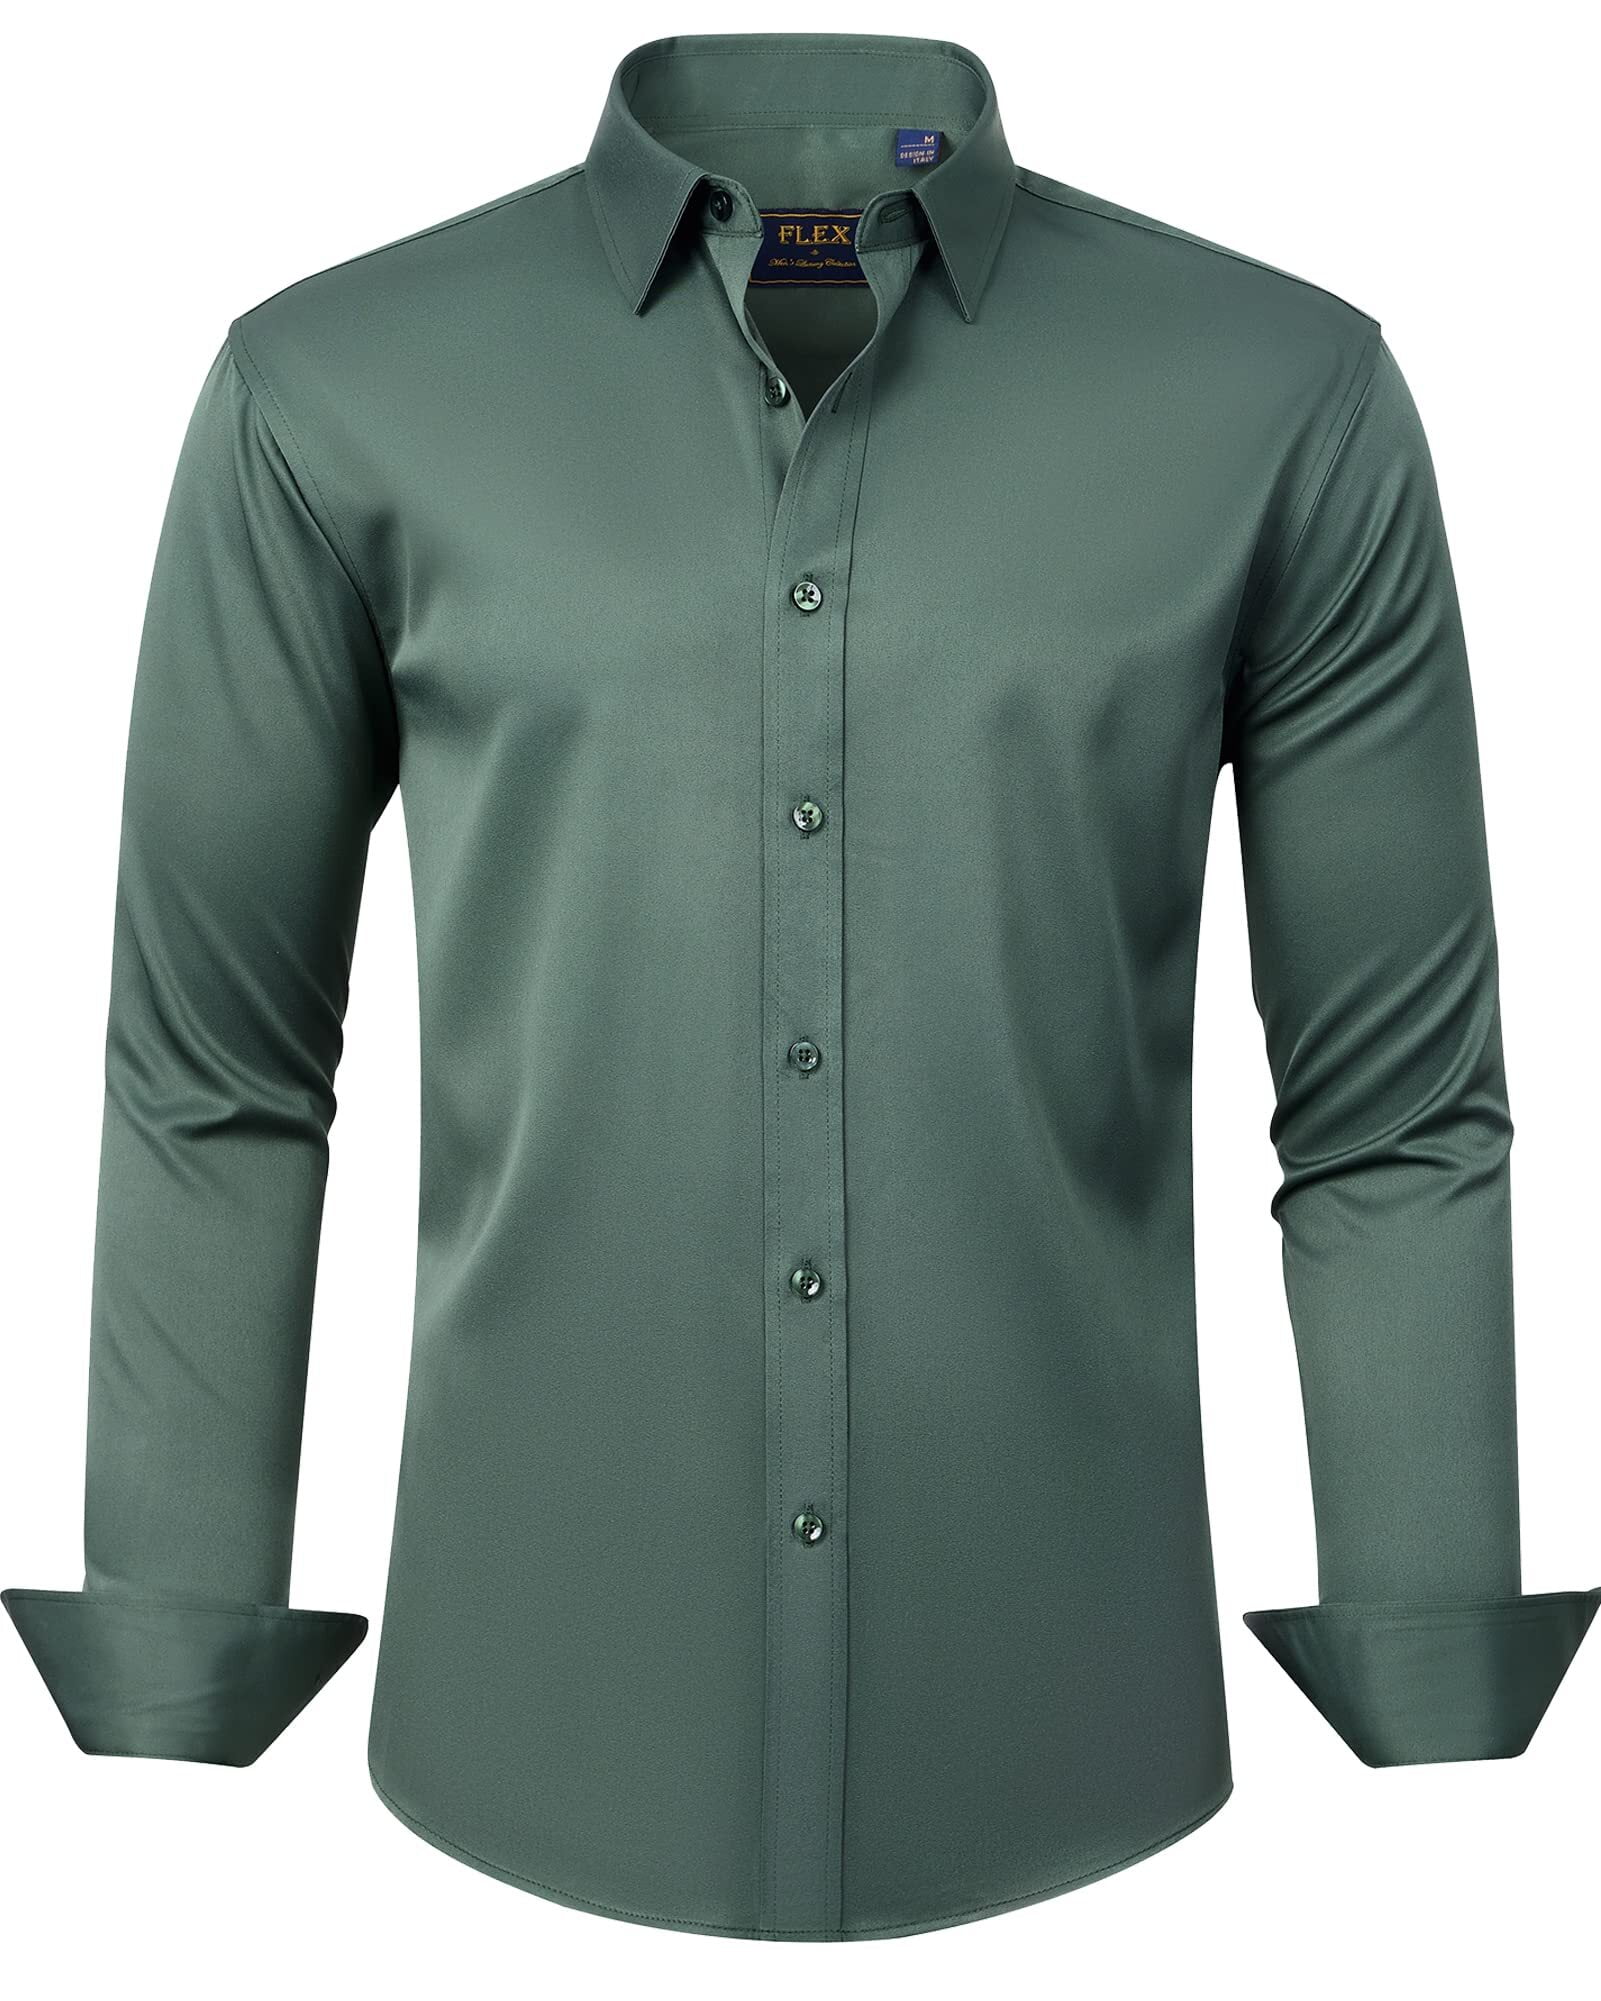 Alimens & Gentle Stretch Formal Shirts for Men Long Sleeve Work Dress ...